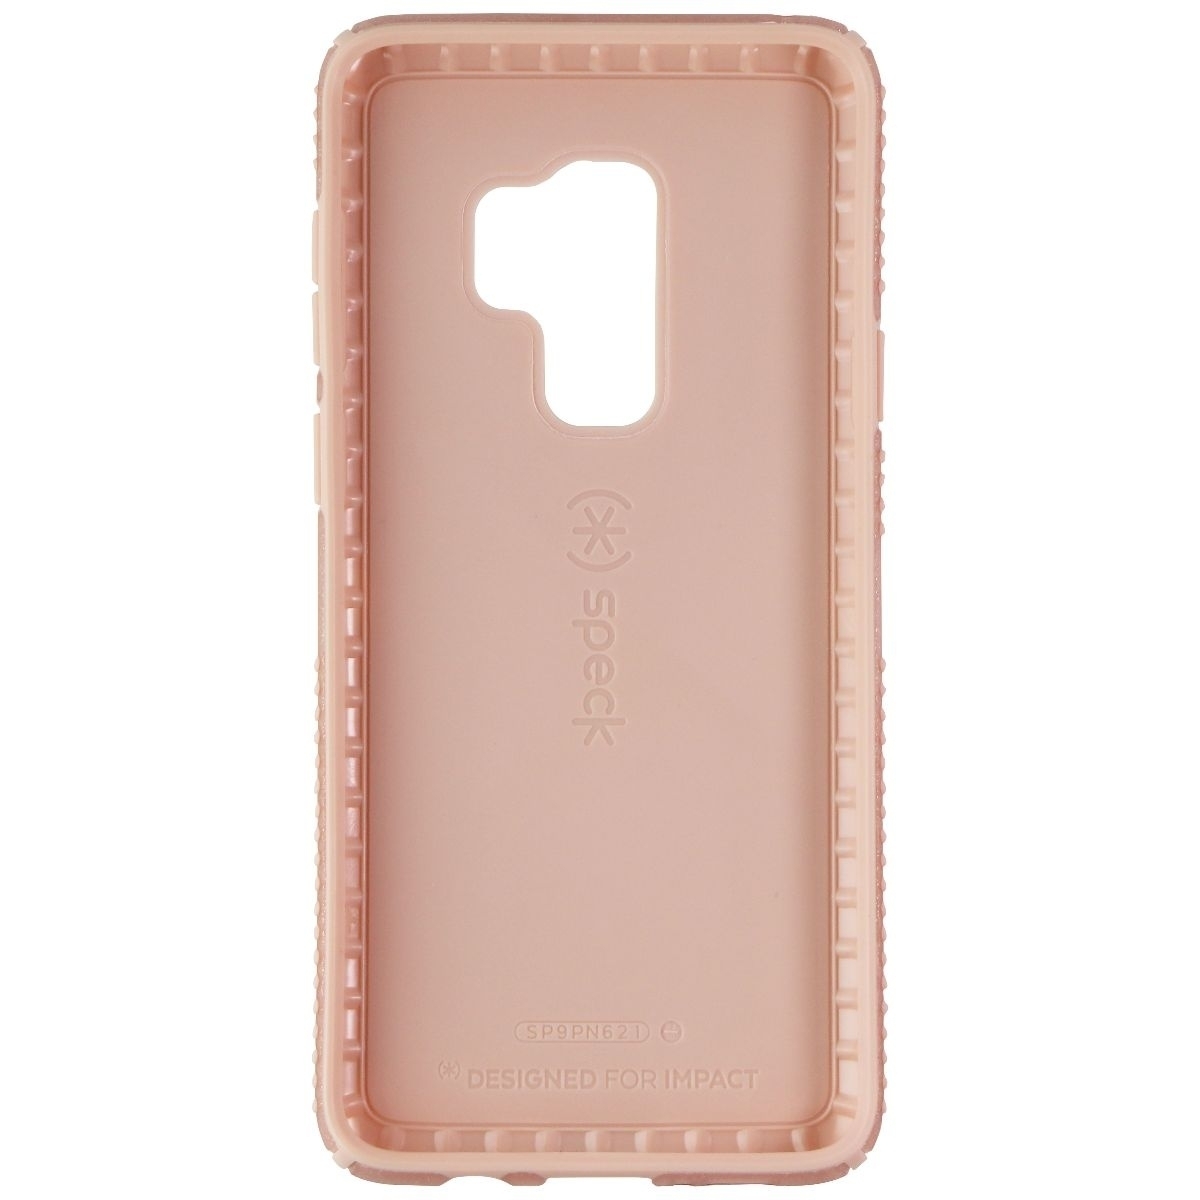 Speck Presidio Grip Glitter Series Hybrid Hard Case For Galaxy S9+ (Plus) - Pink